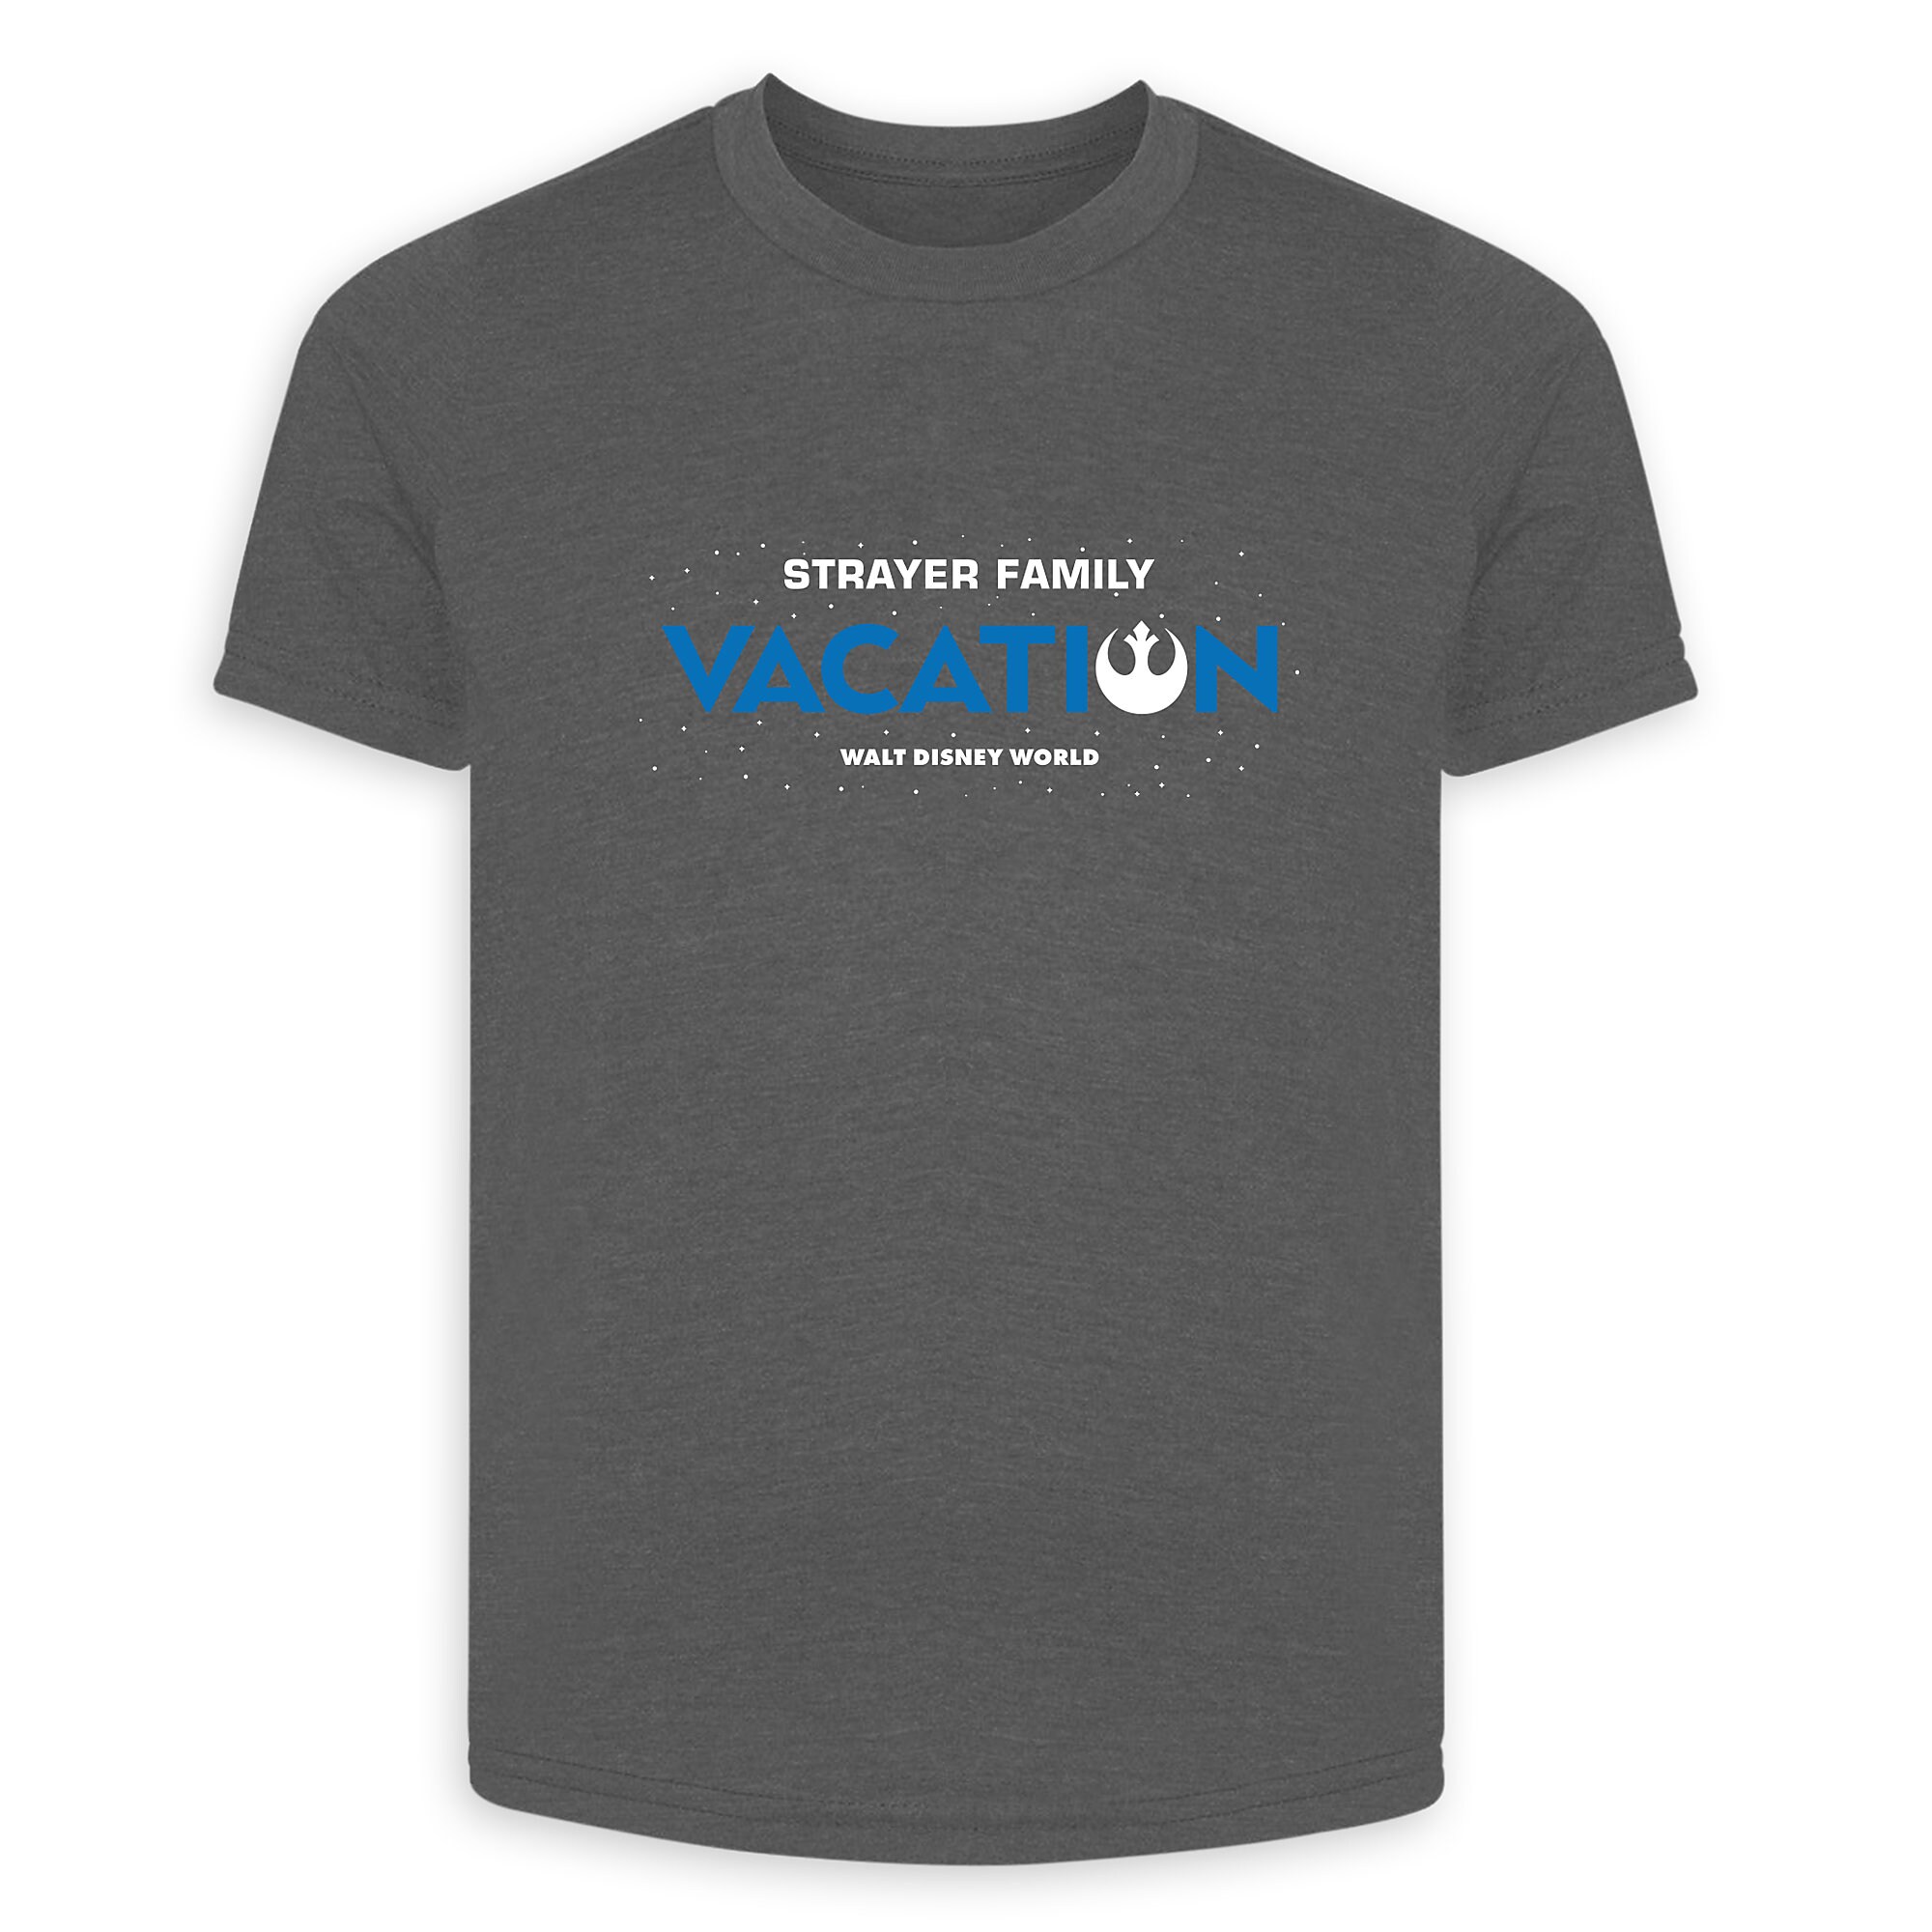 Adults' Star Wars Alliance Family Vacation T-Shirt - Walt Disney World - Customized